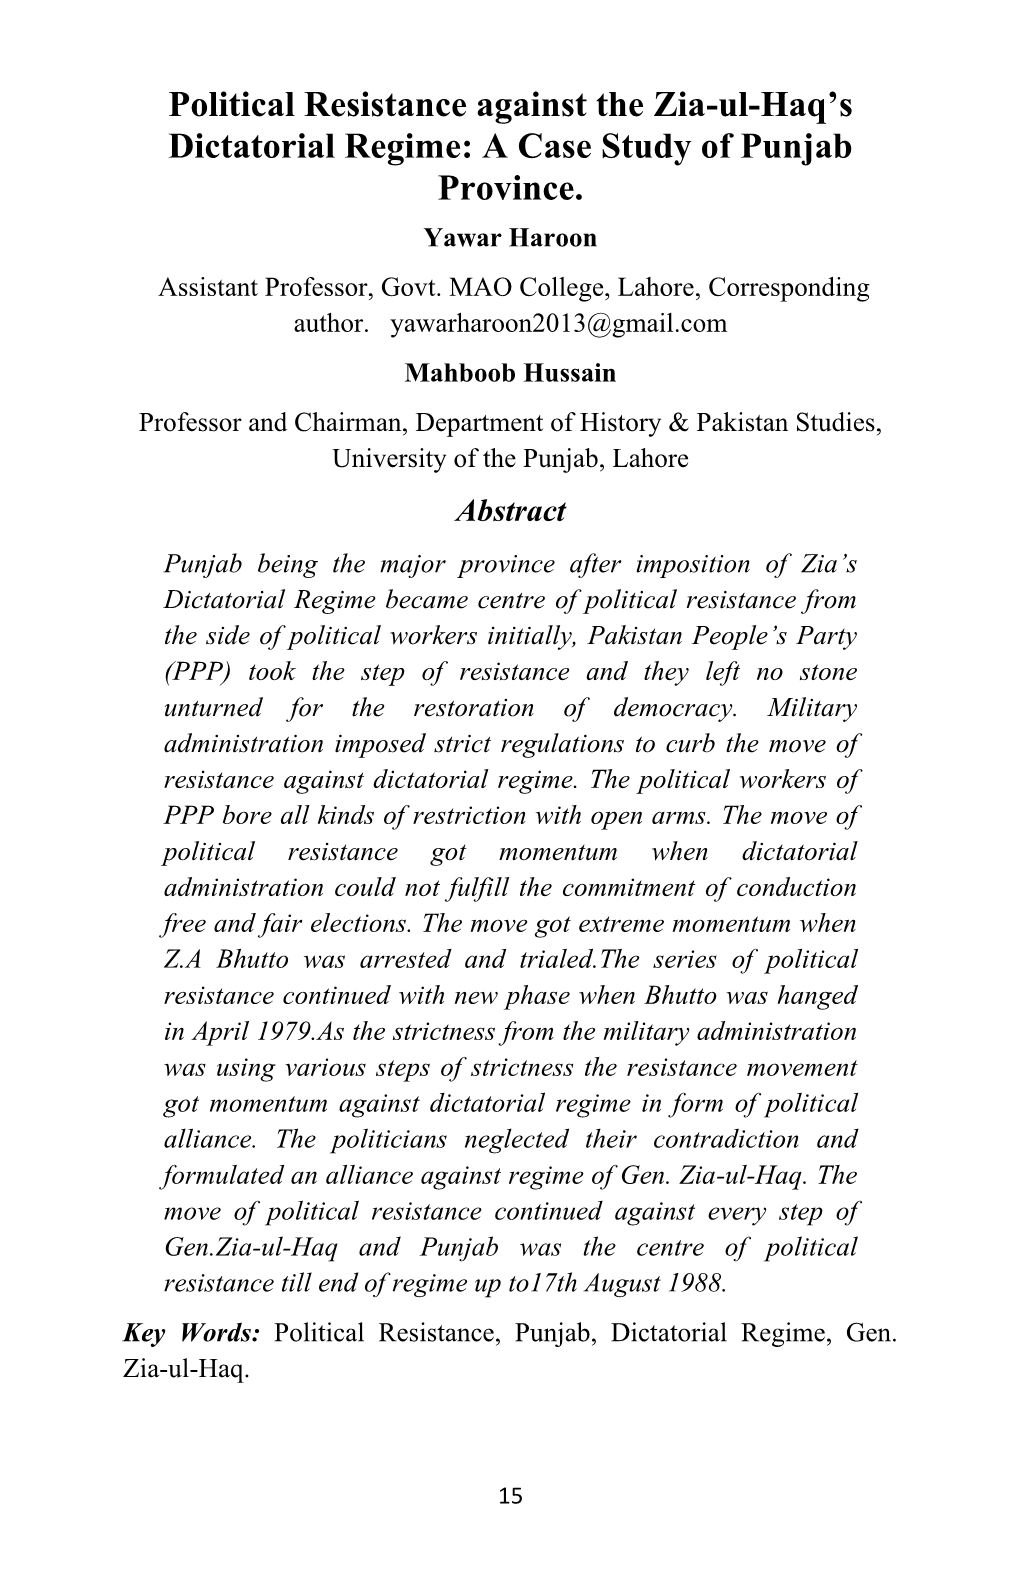 Political Resistance Against the Zia-Ul-Haq’S Dictatorial Regime: a Case Study of Punjab Province